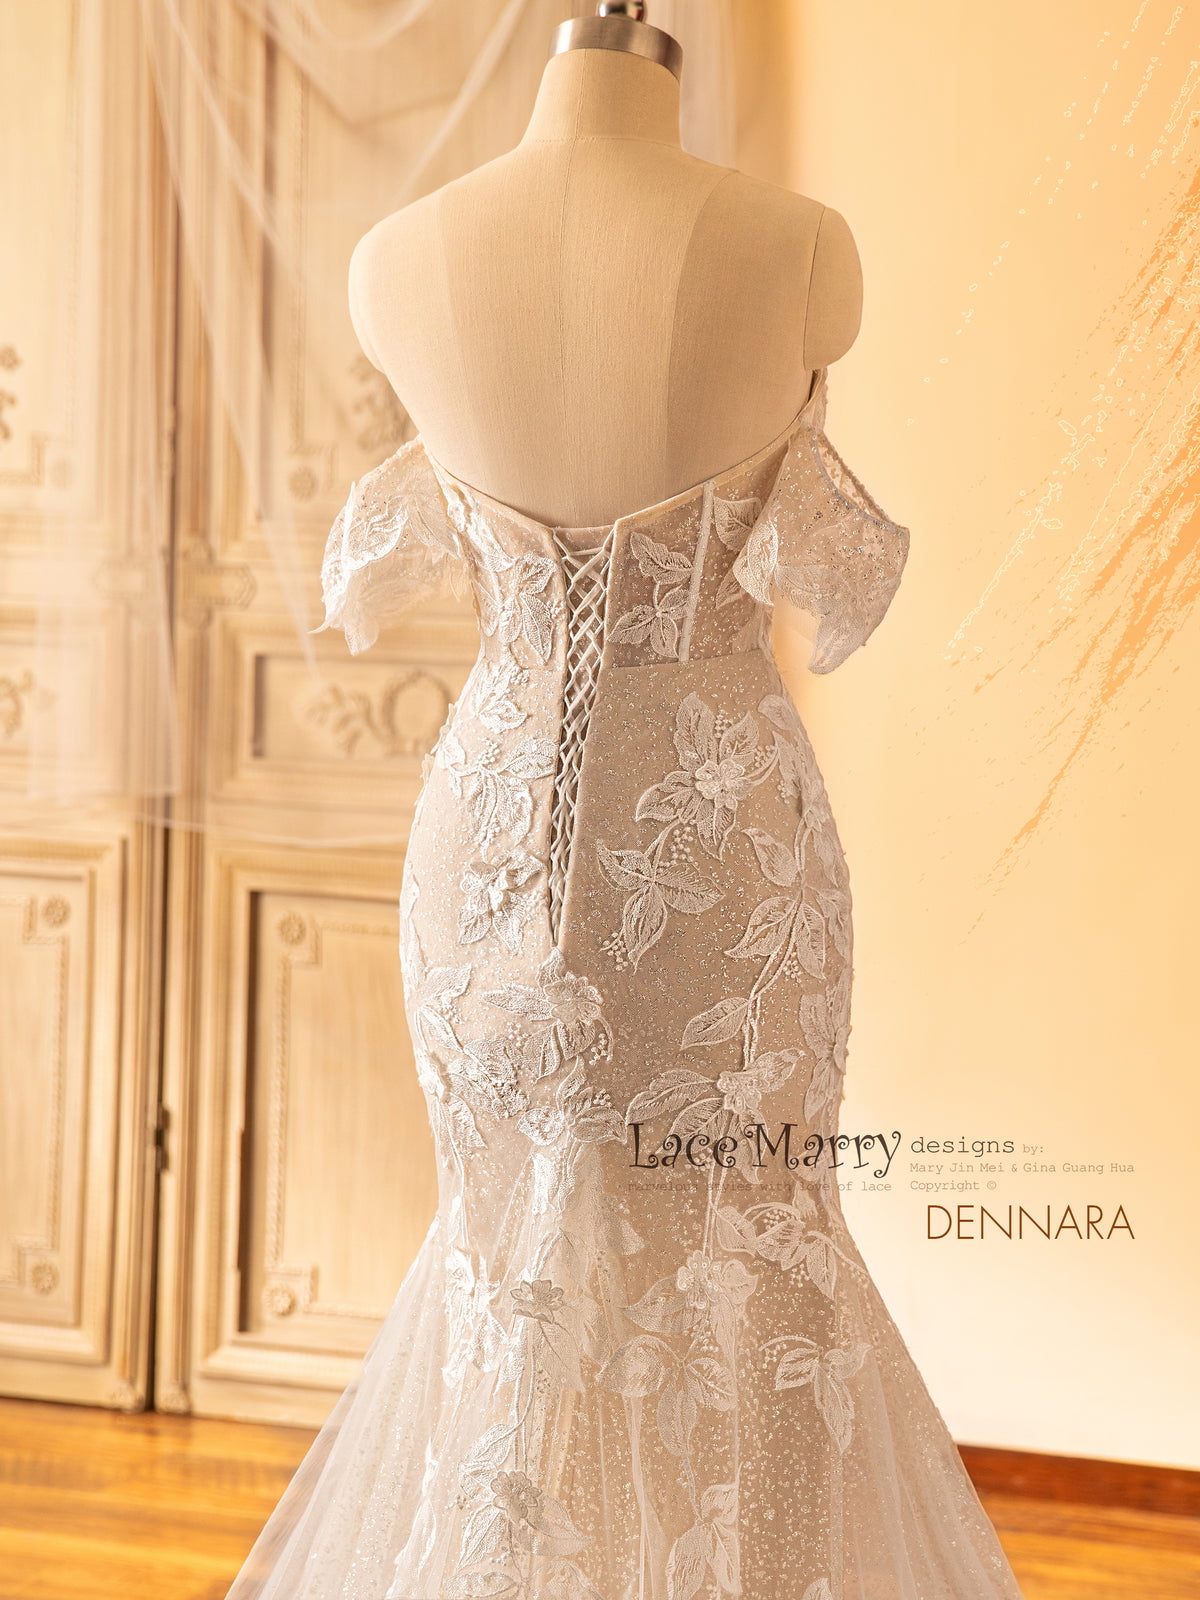 DENNARA / Floral Wedding Dress with Sparkling Glitter Tulle